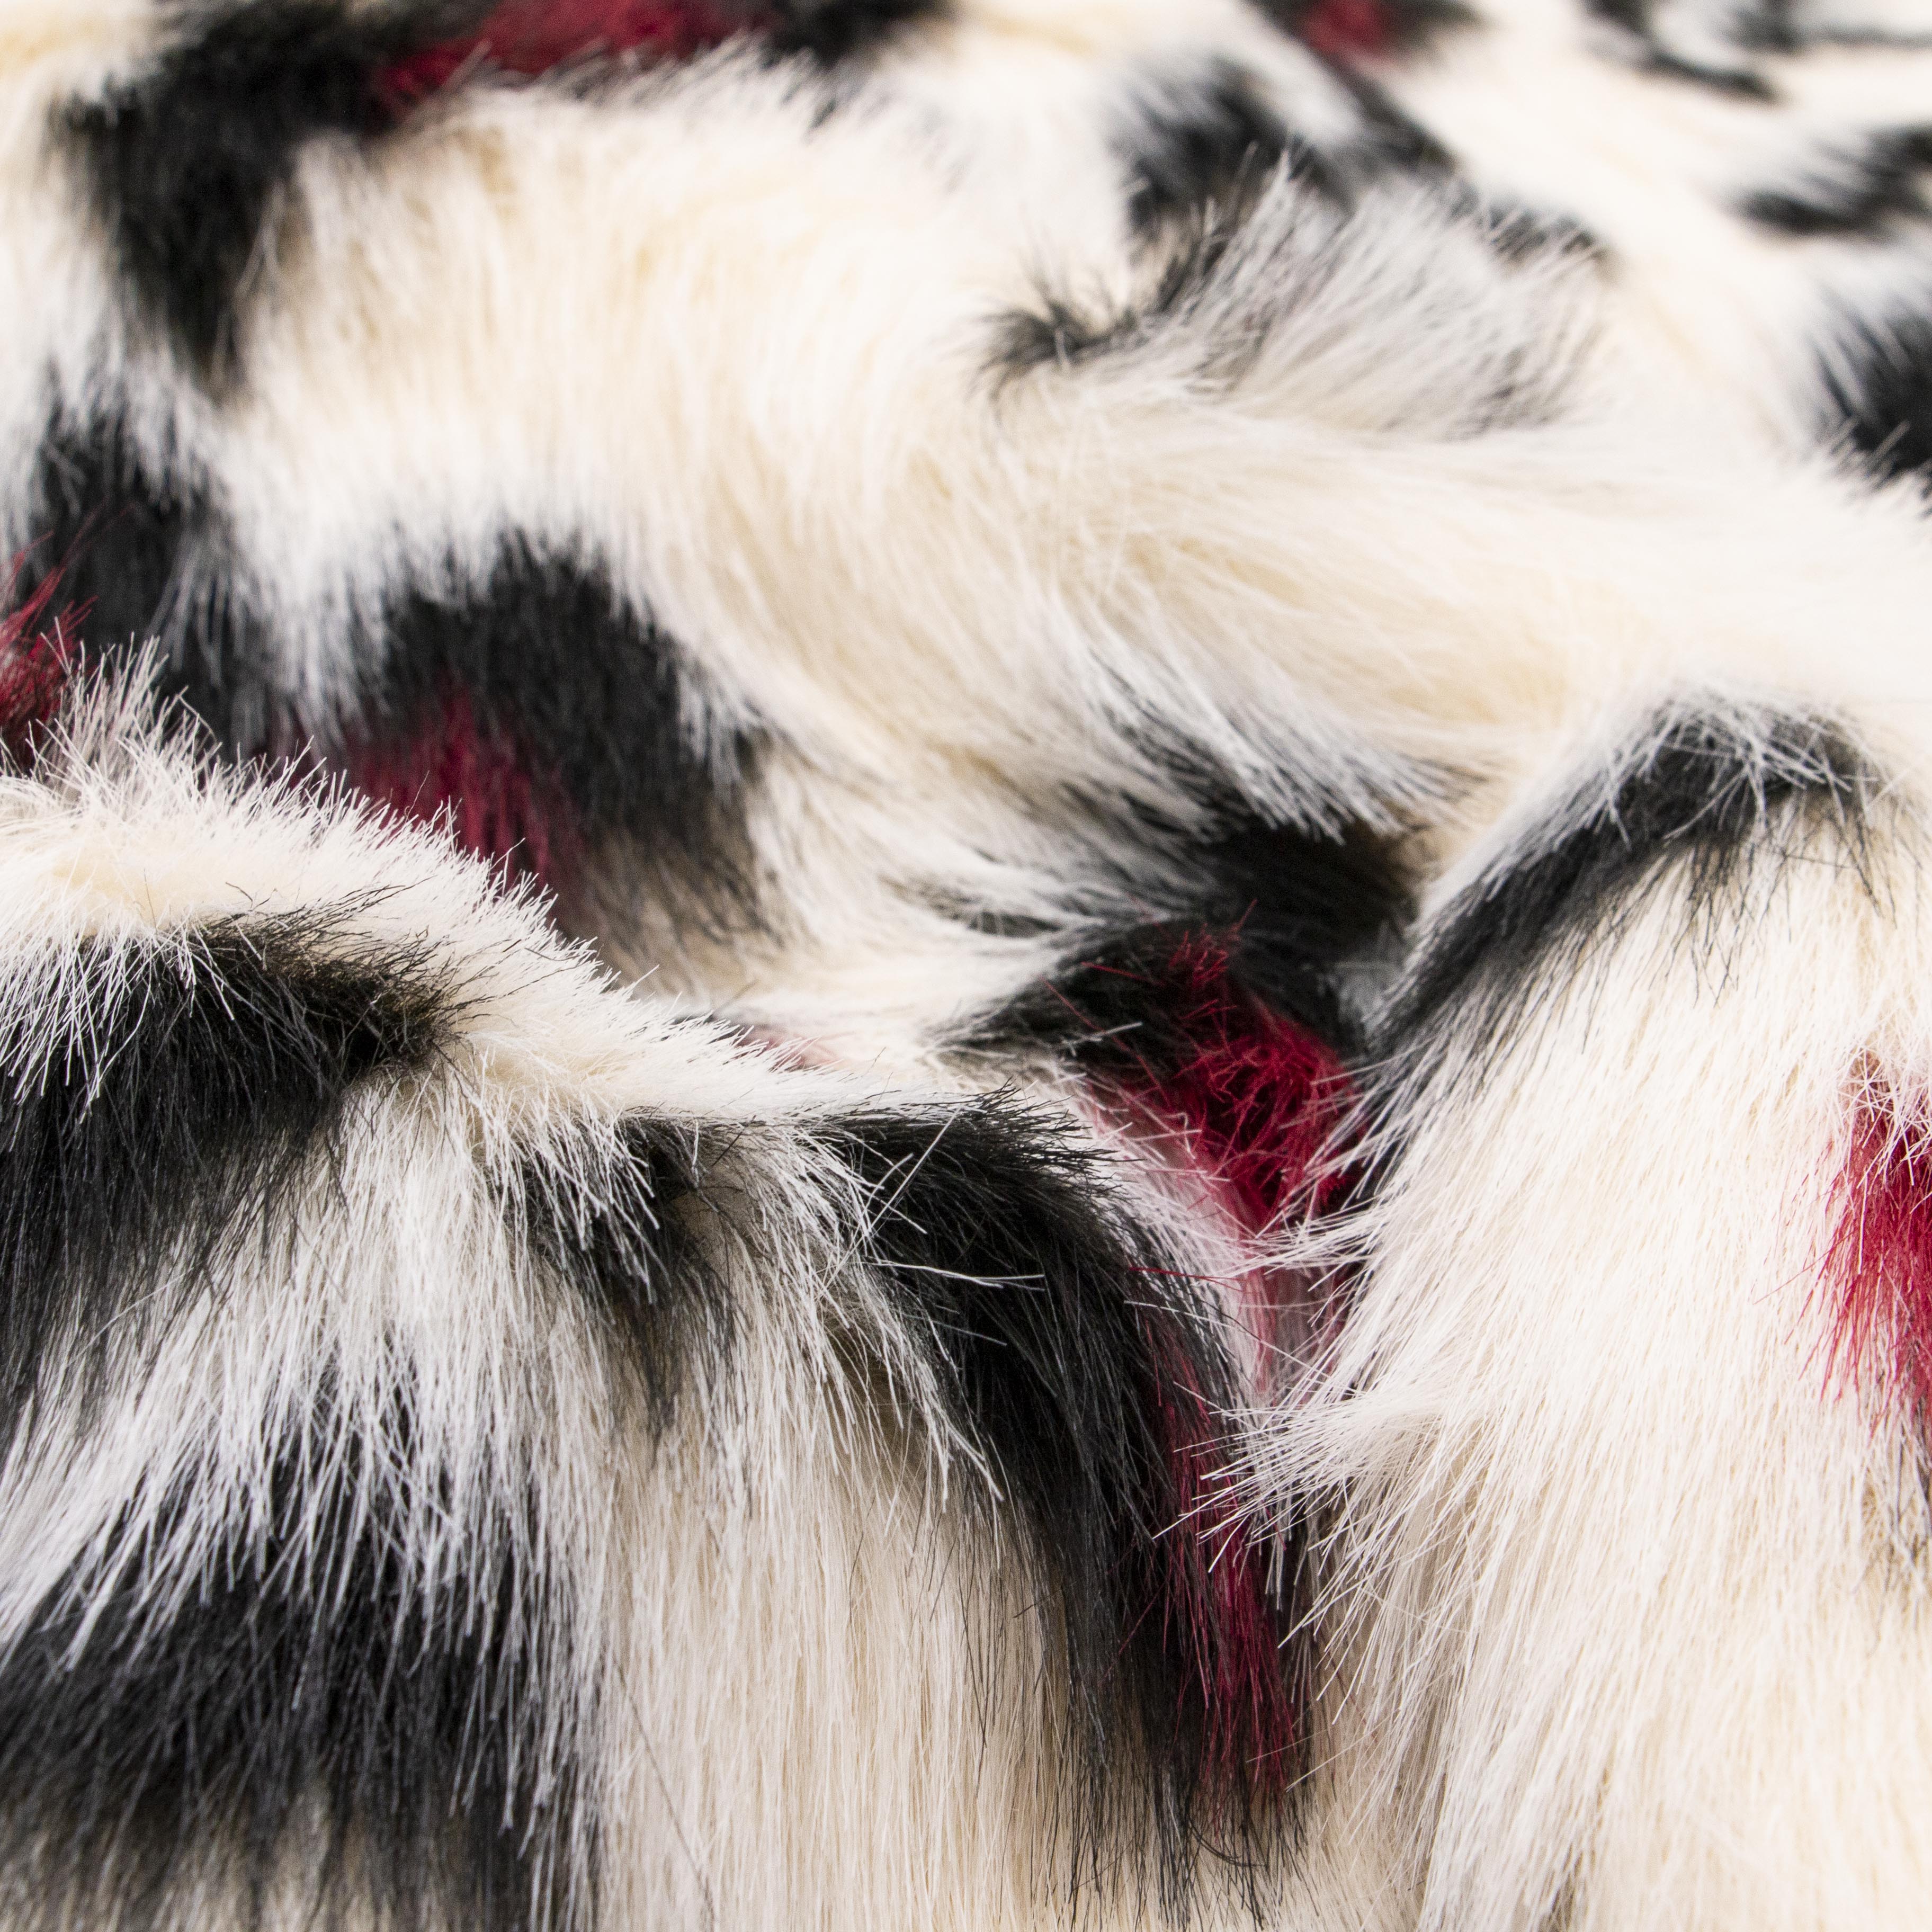 Long Pile faux fur Artificial fabric for Clothing 40MM Soft Faux Fur Fabric for garment Home Textile